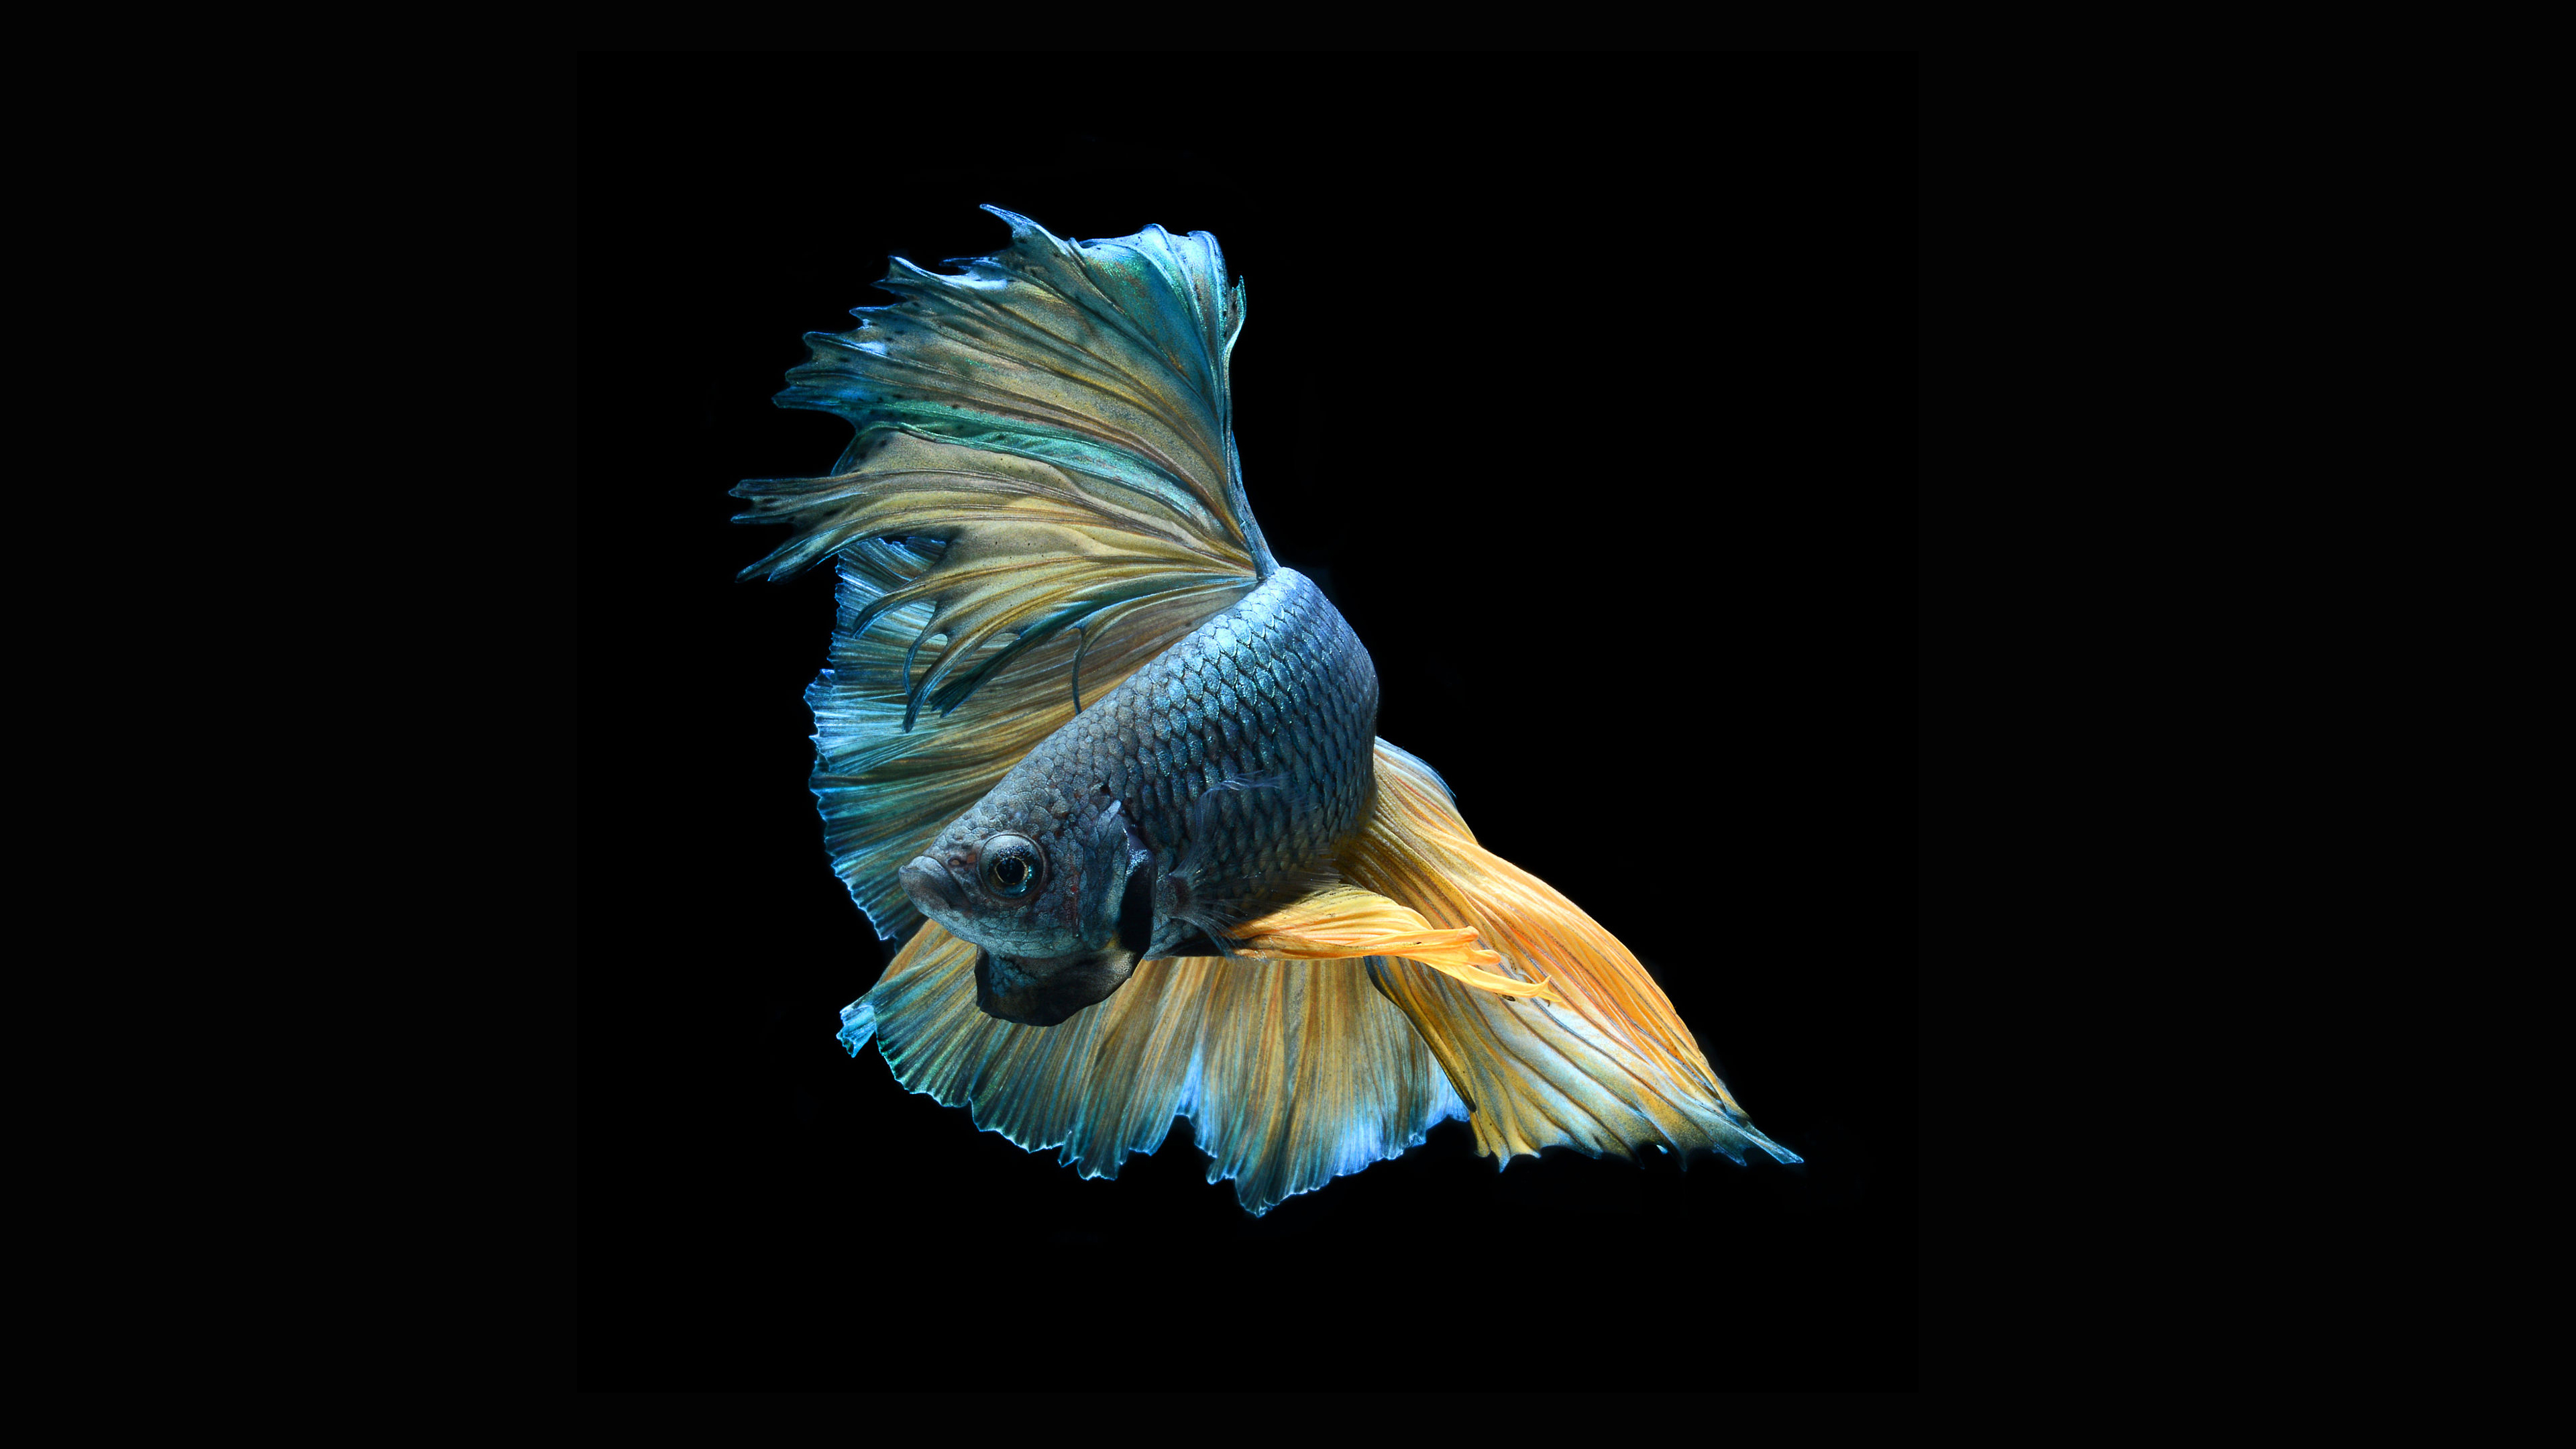 betta fish wallpaper hd,feather,wing,tail,organism,bird